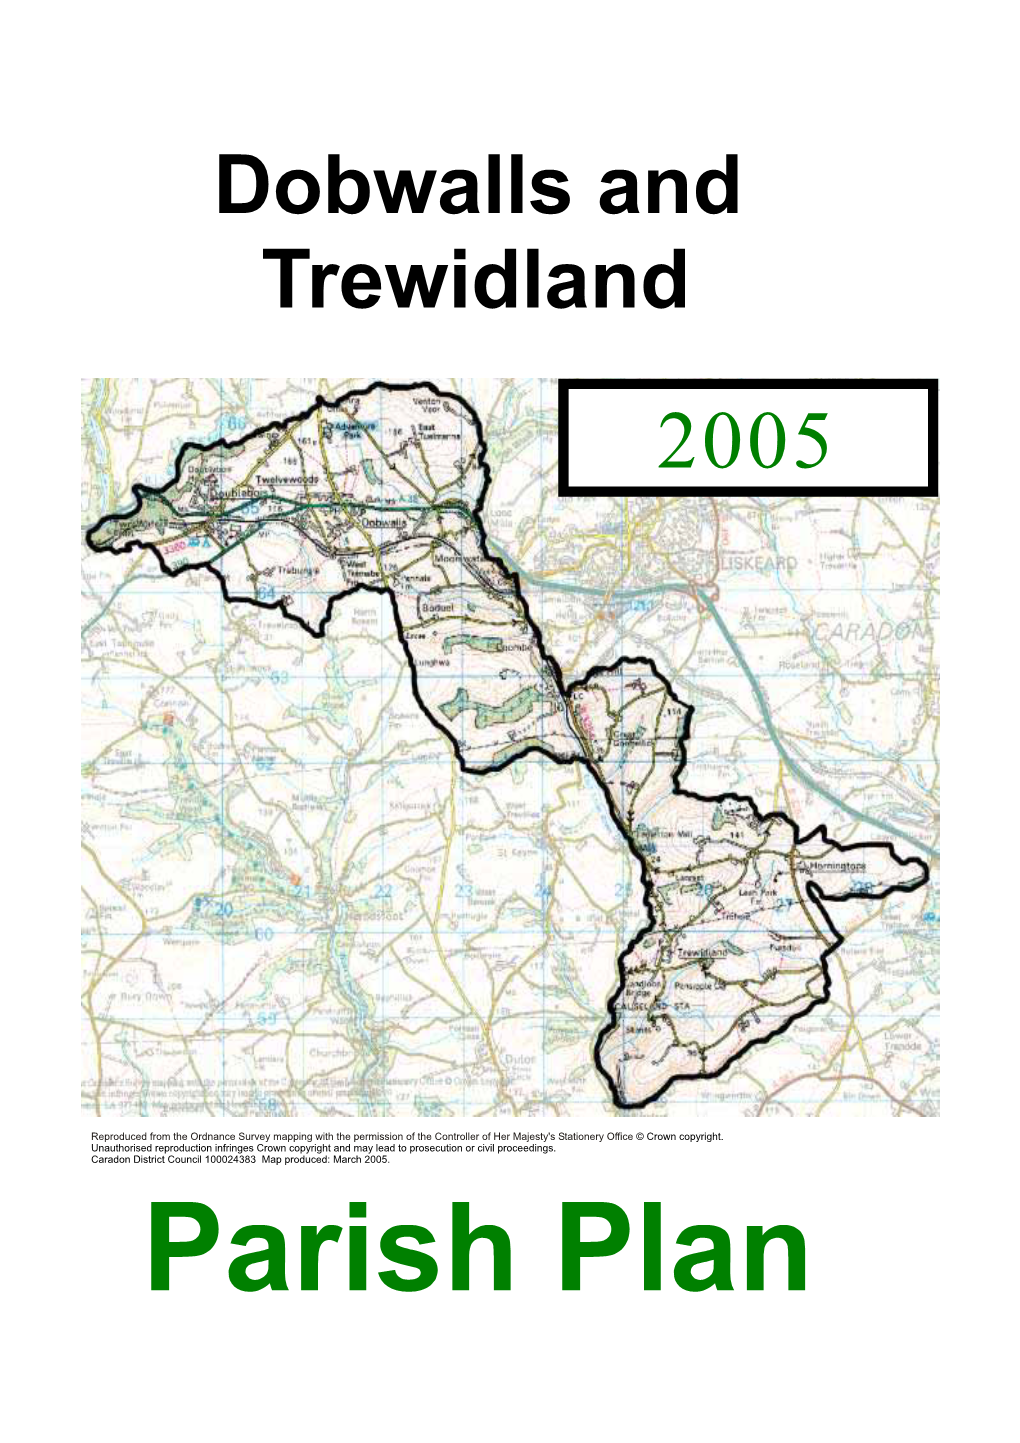 Dobwalls & Trewidland Parish Plan 2005.Cdr